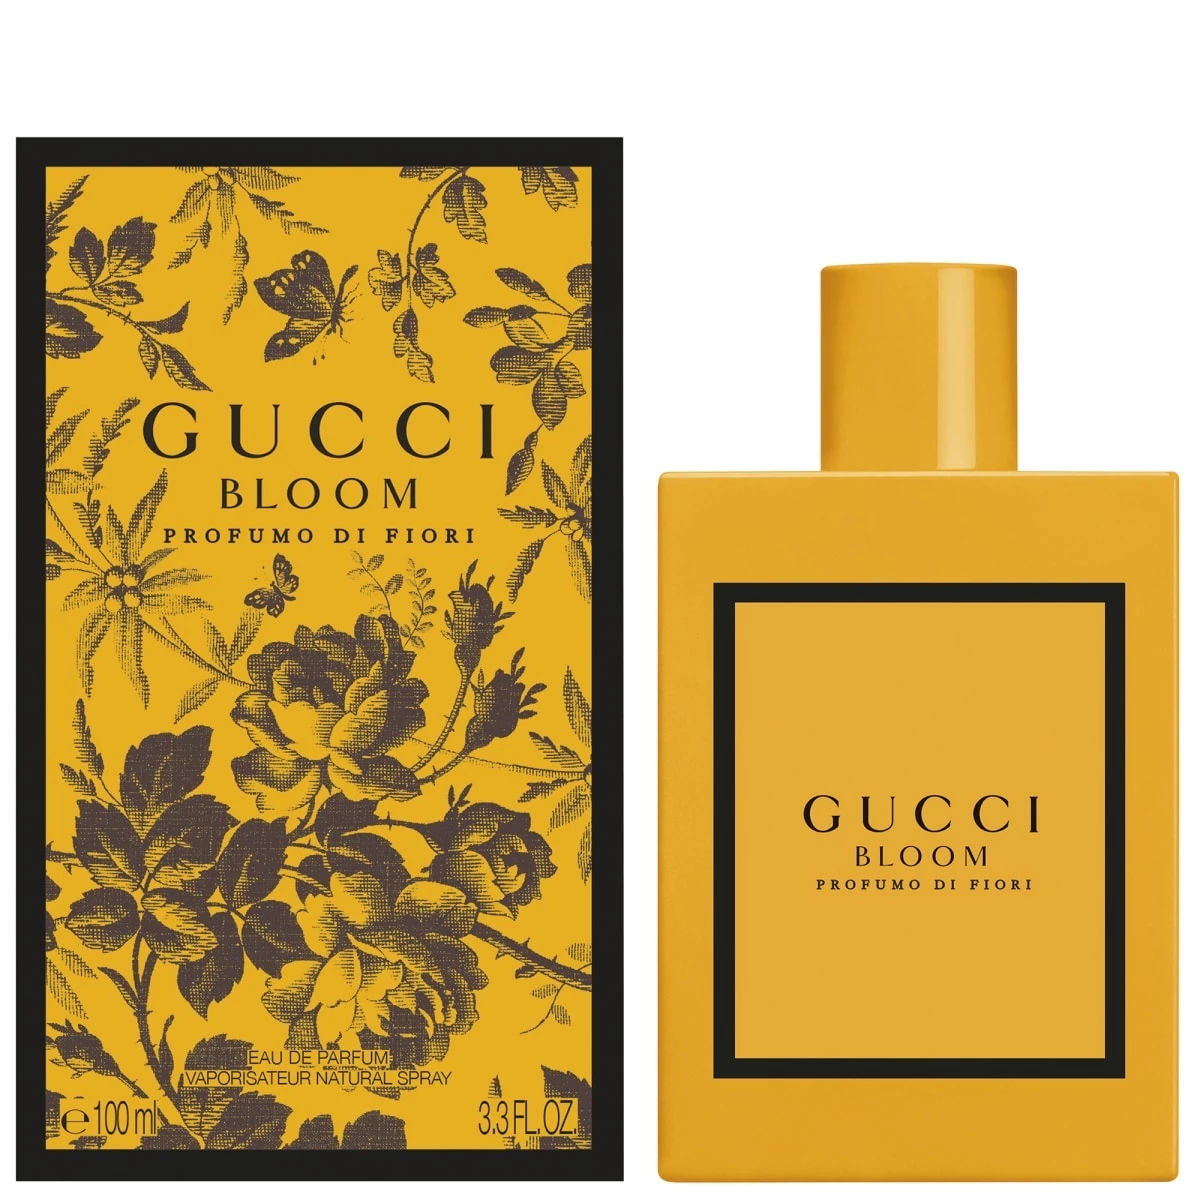 Gucci Bloom Profumo di Fiori - Eau de Parfum - Incenza